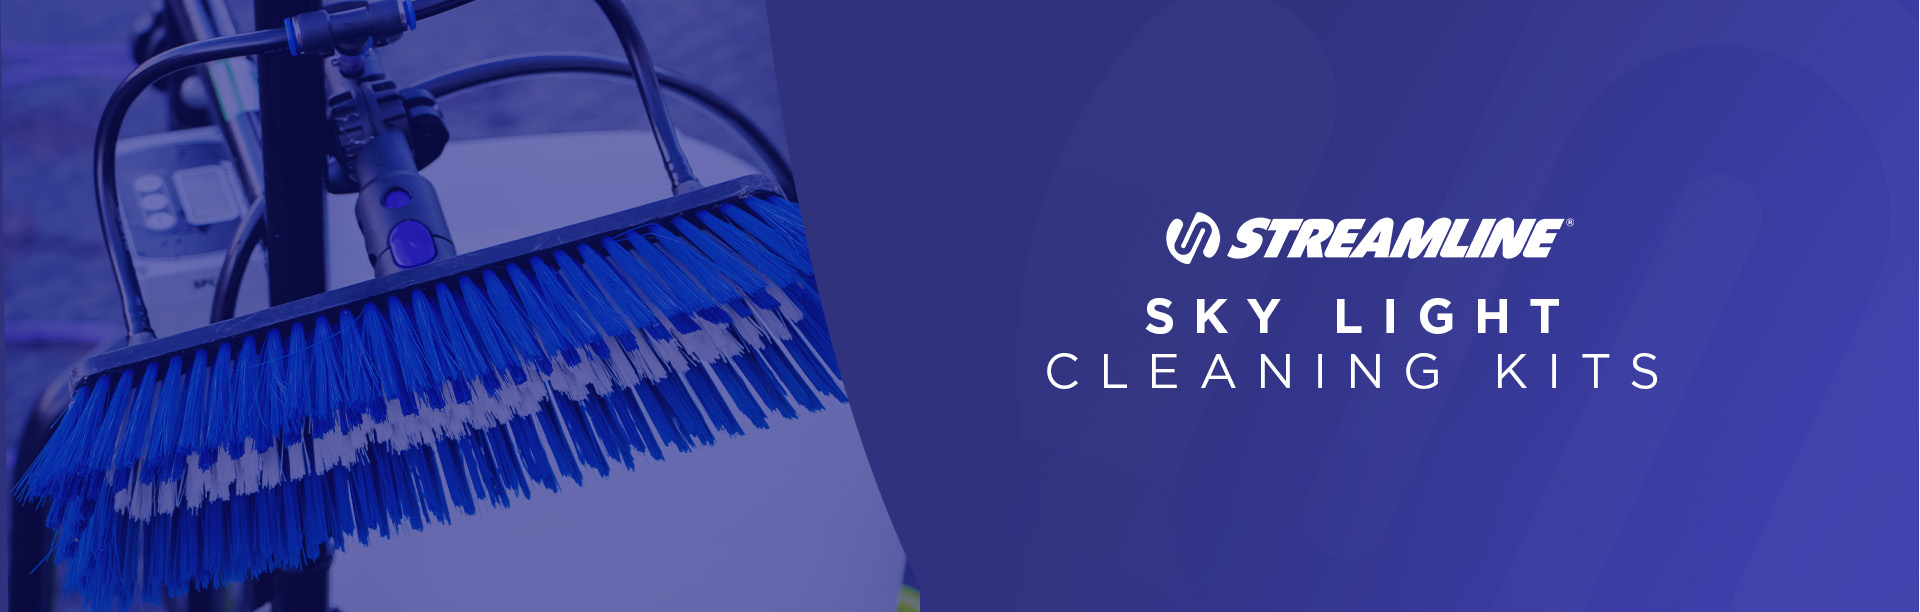 Streamline Sky Light Cleaning Kits